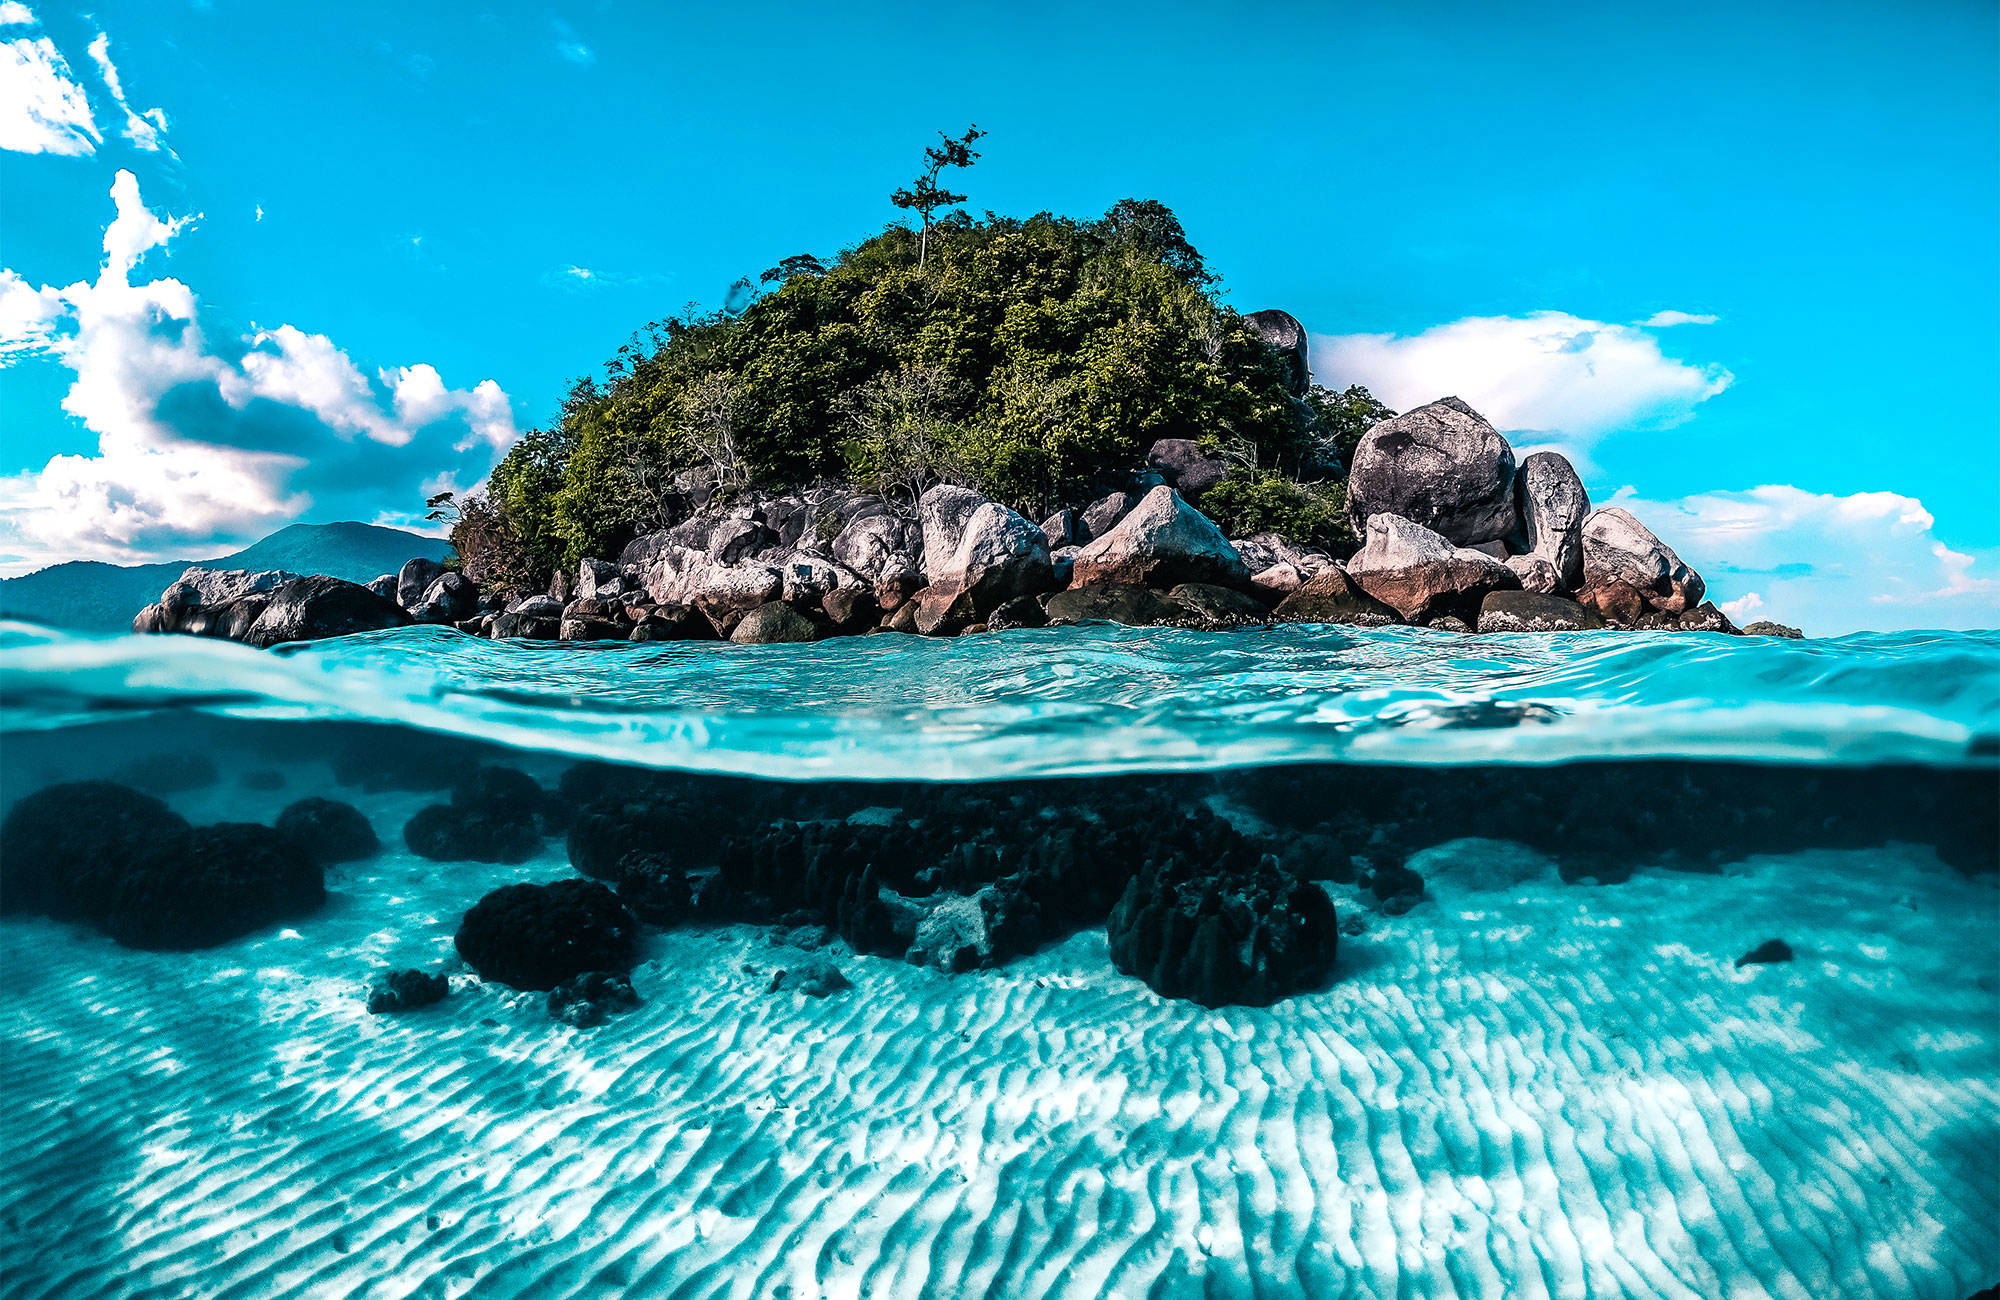 Kijkje onder water op Koh Lipe | Beste reistijd augustus | Beste bestemmingen augustus | Reiskalender | KILROY